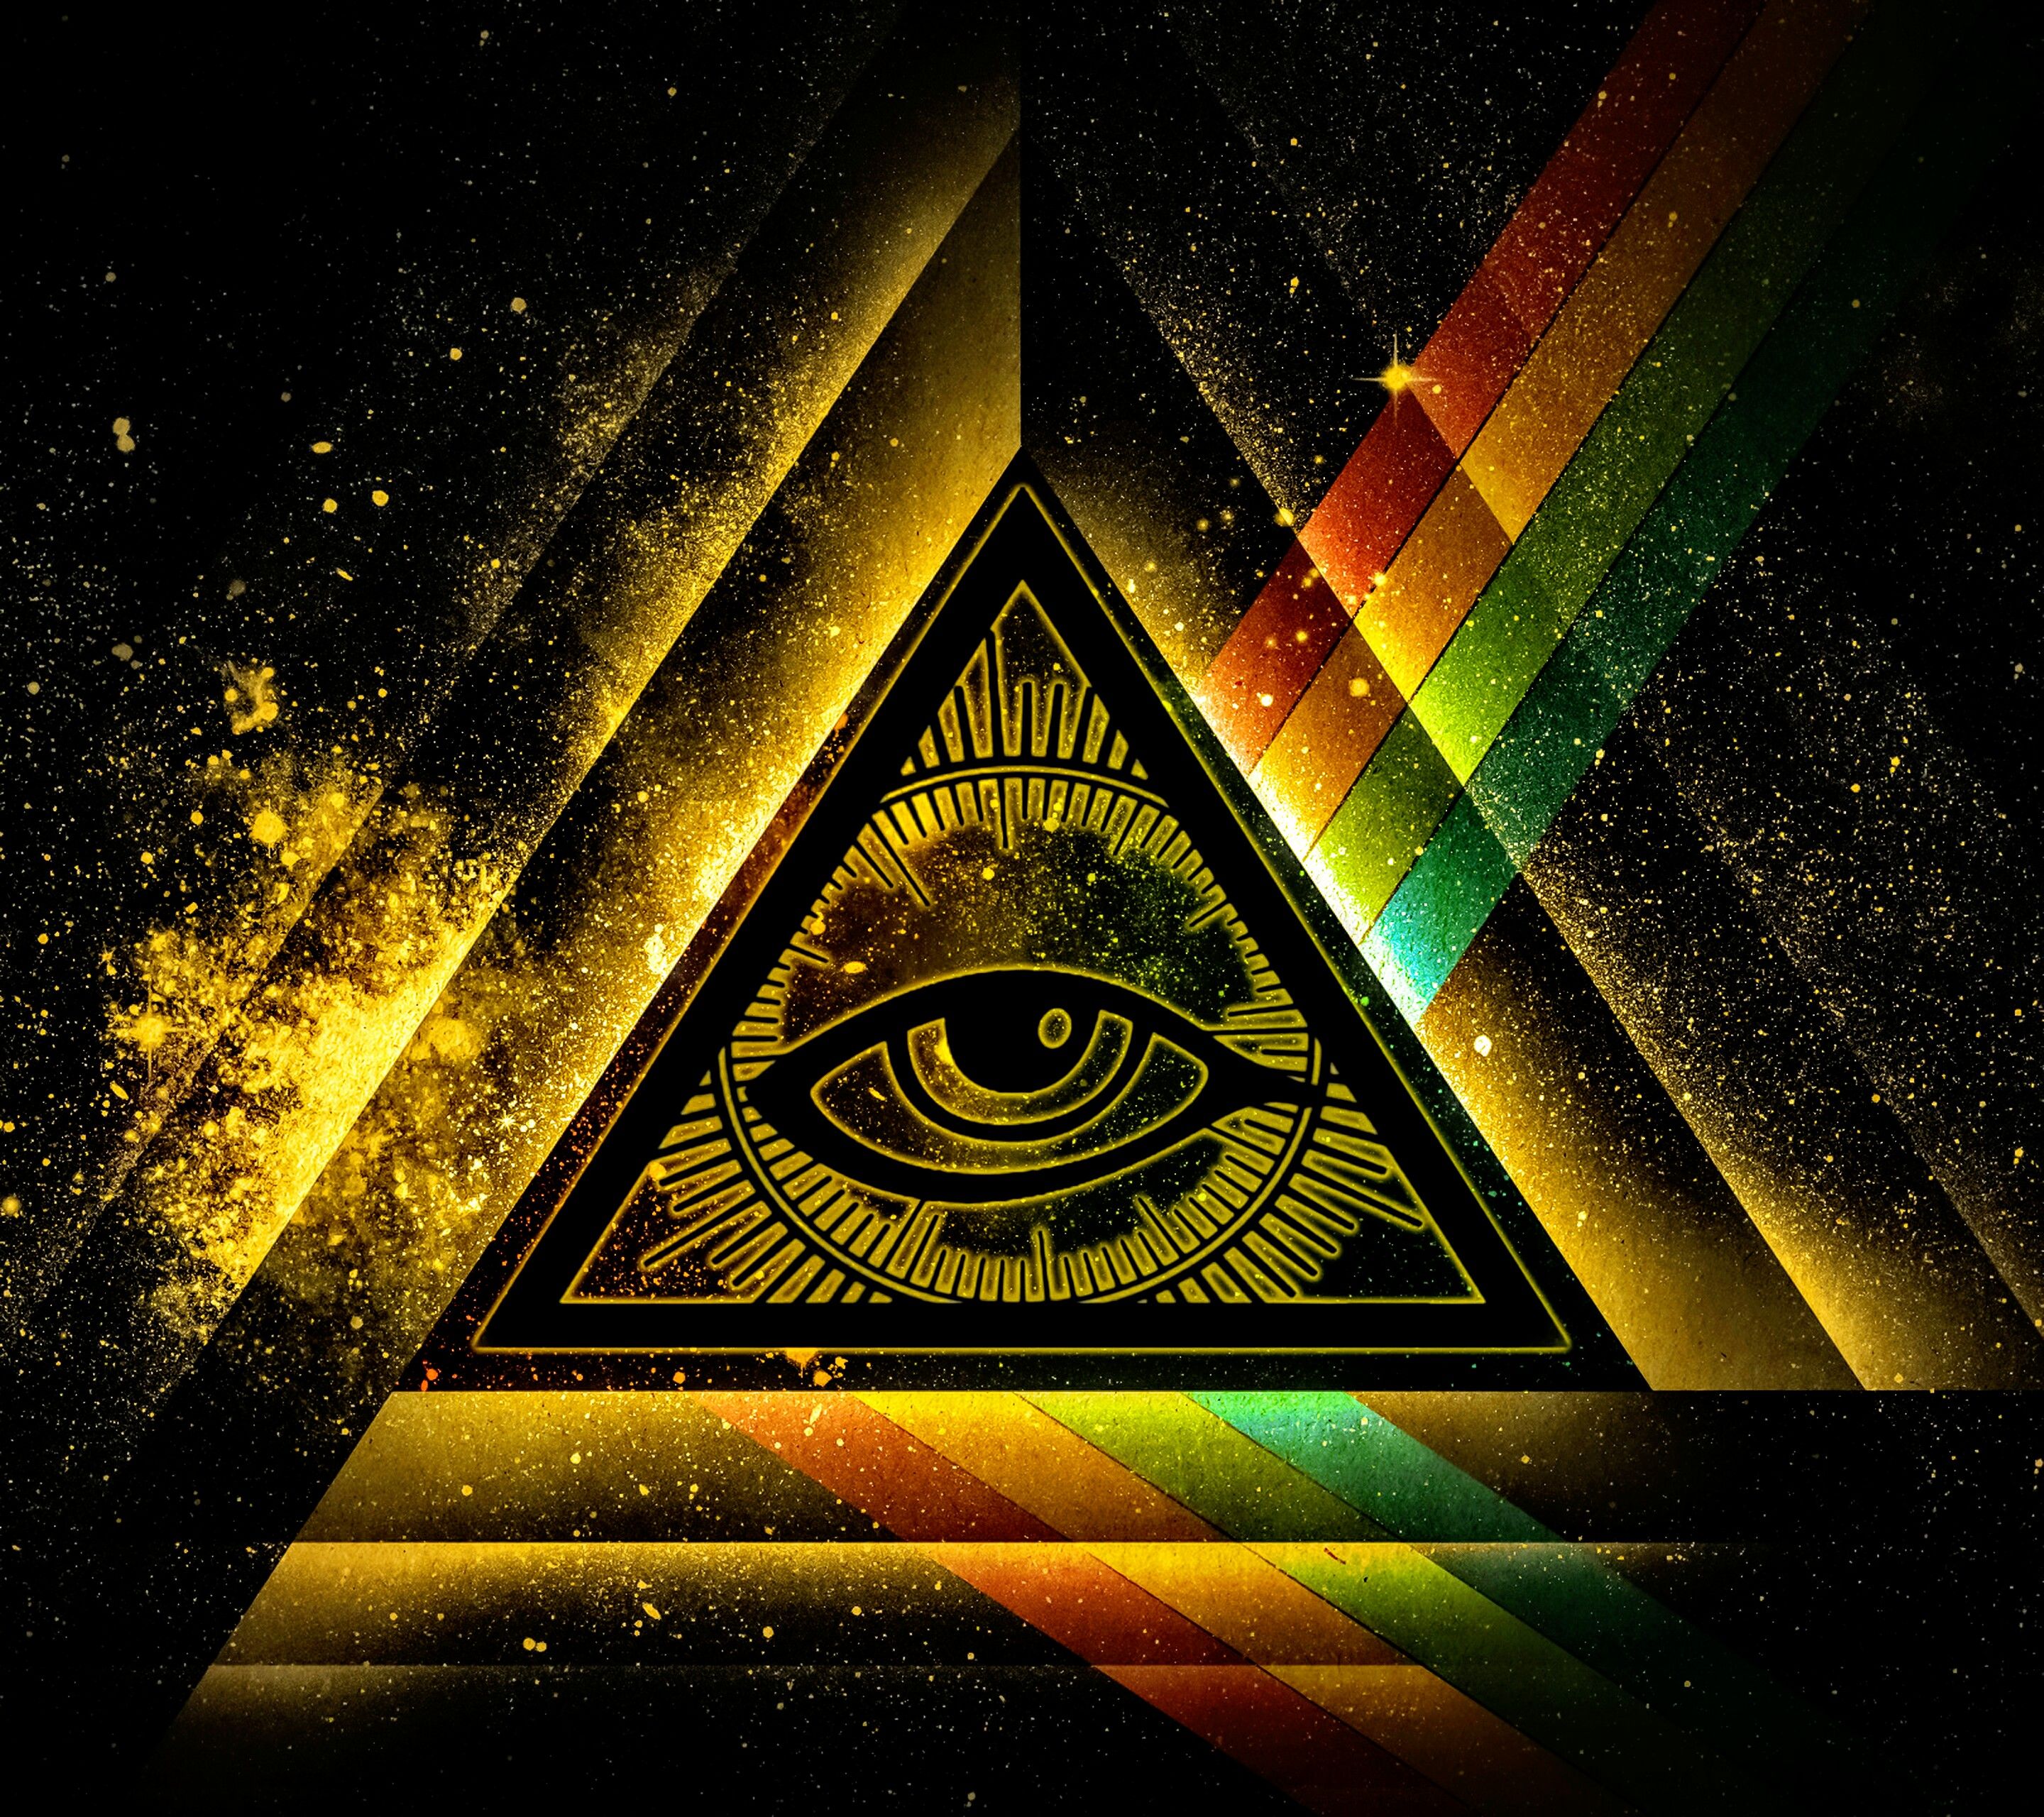 Illuminati High Definition Wallpaper 24910